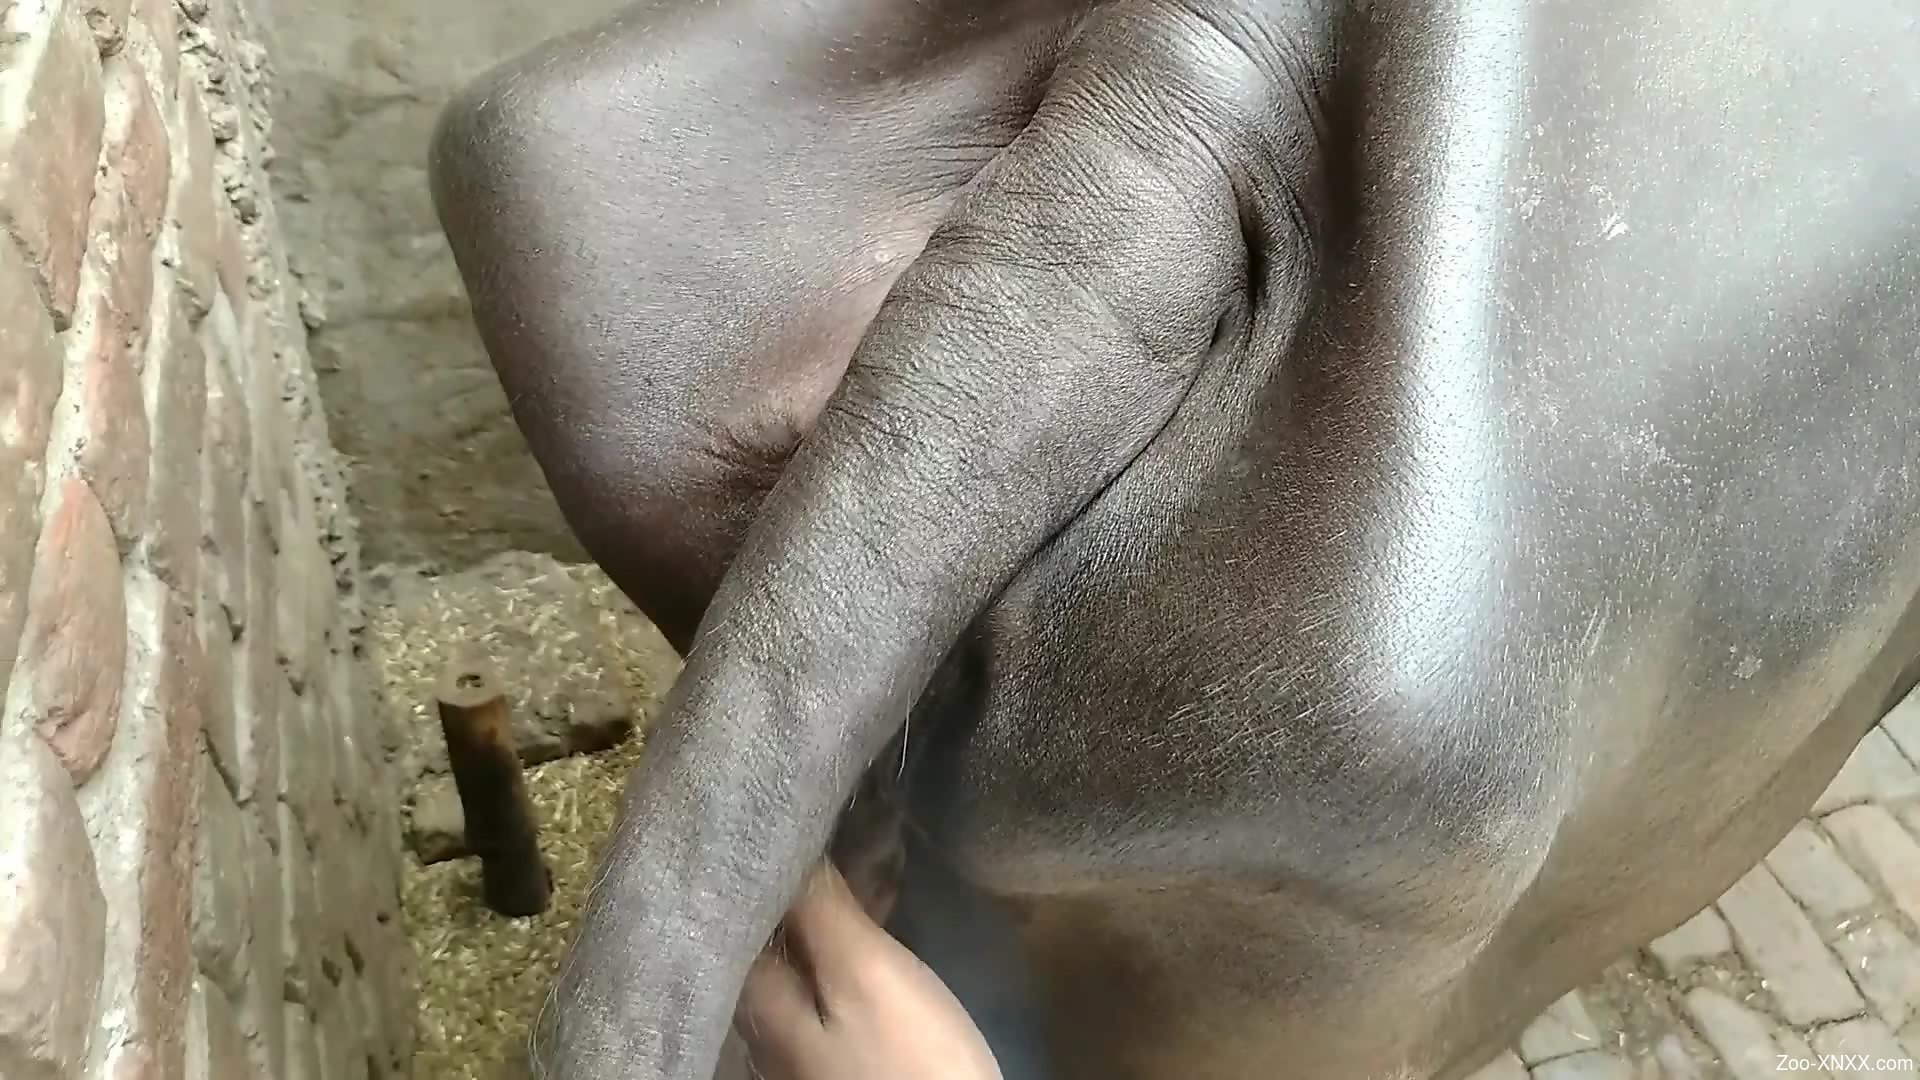 Man and buffalo sex video